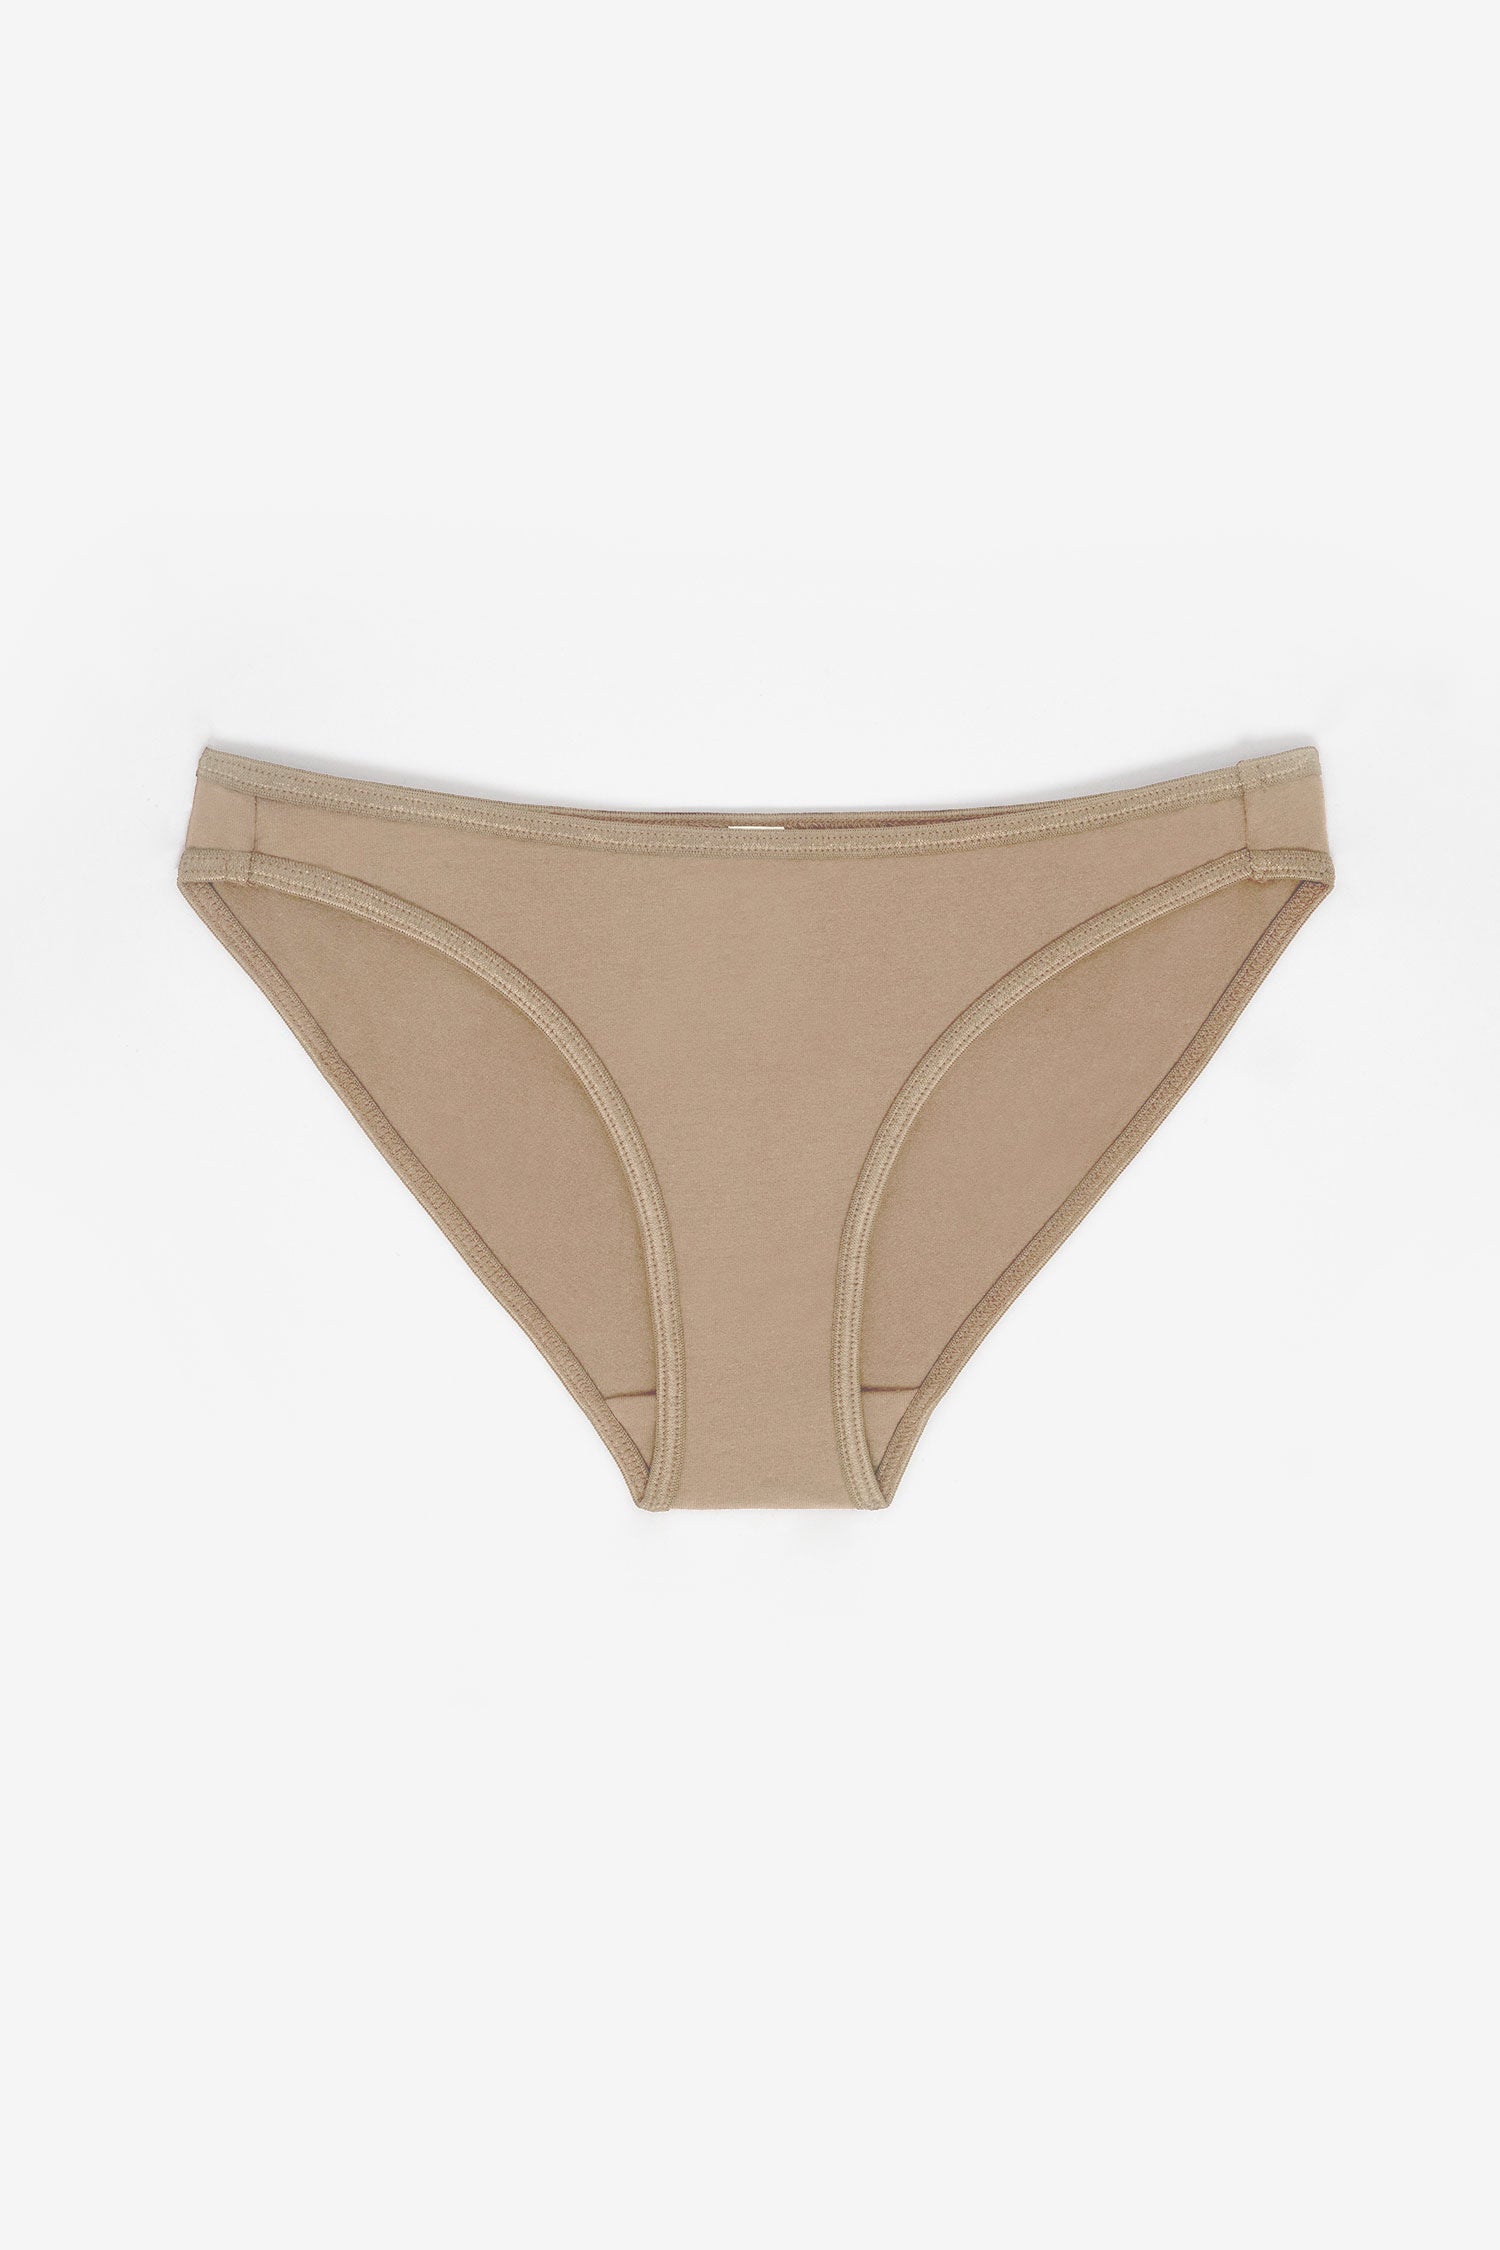 Vermont Country Store Women's Nylon Back-Seam Brief Panty, 2 Pairs Beige